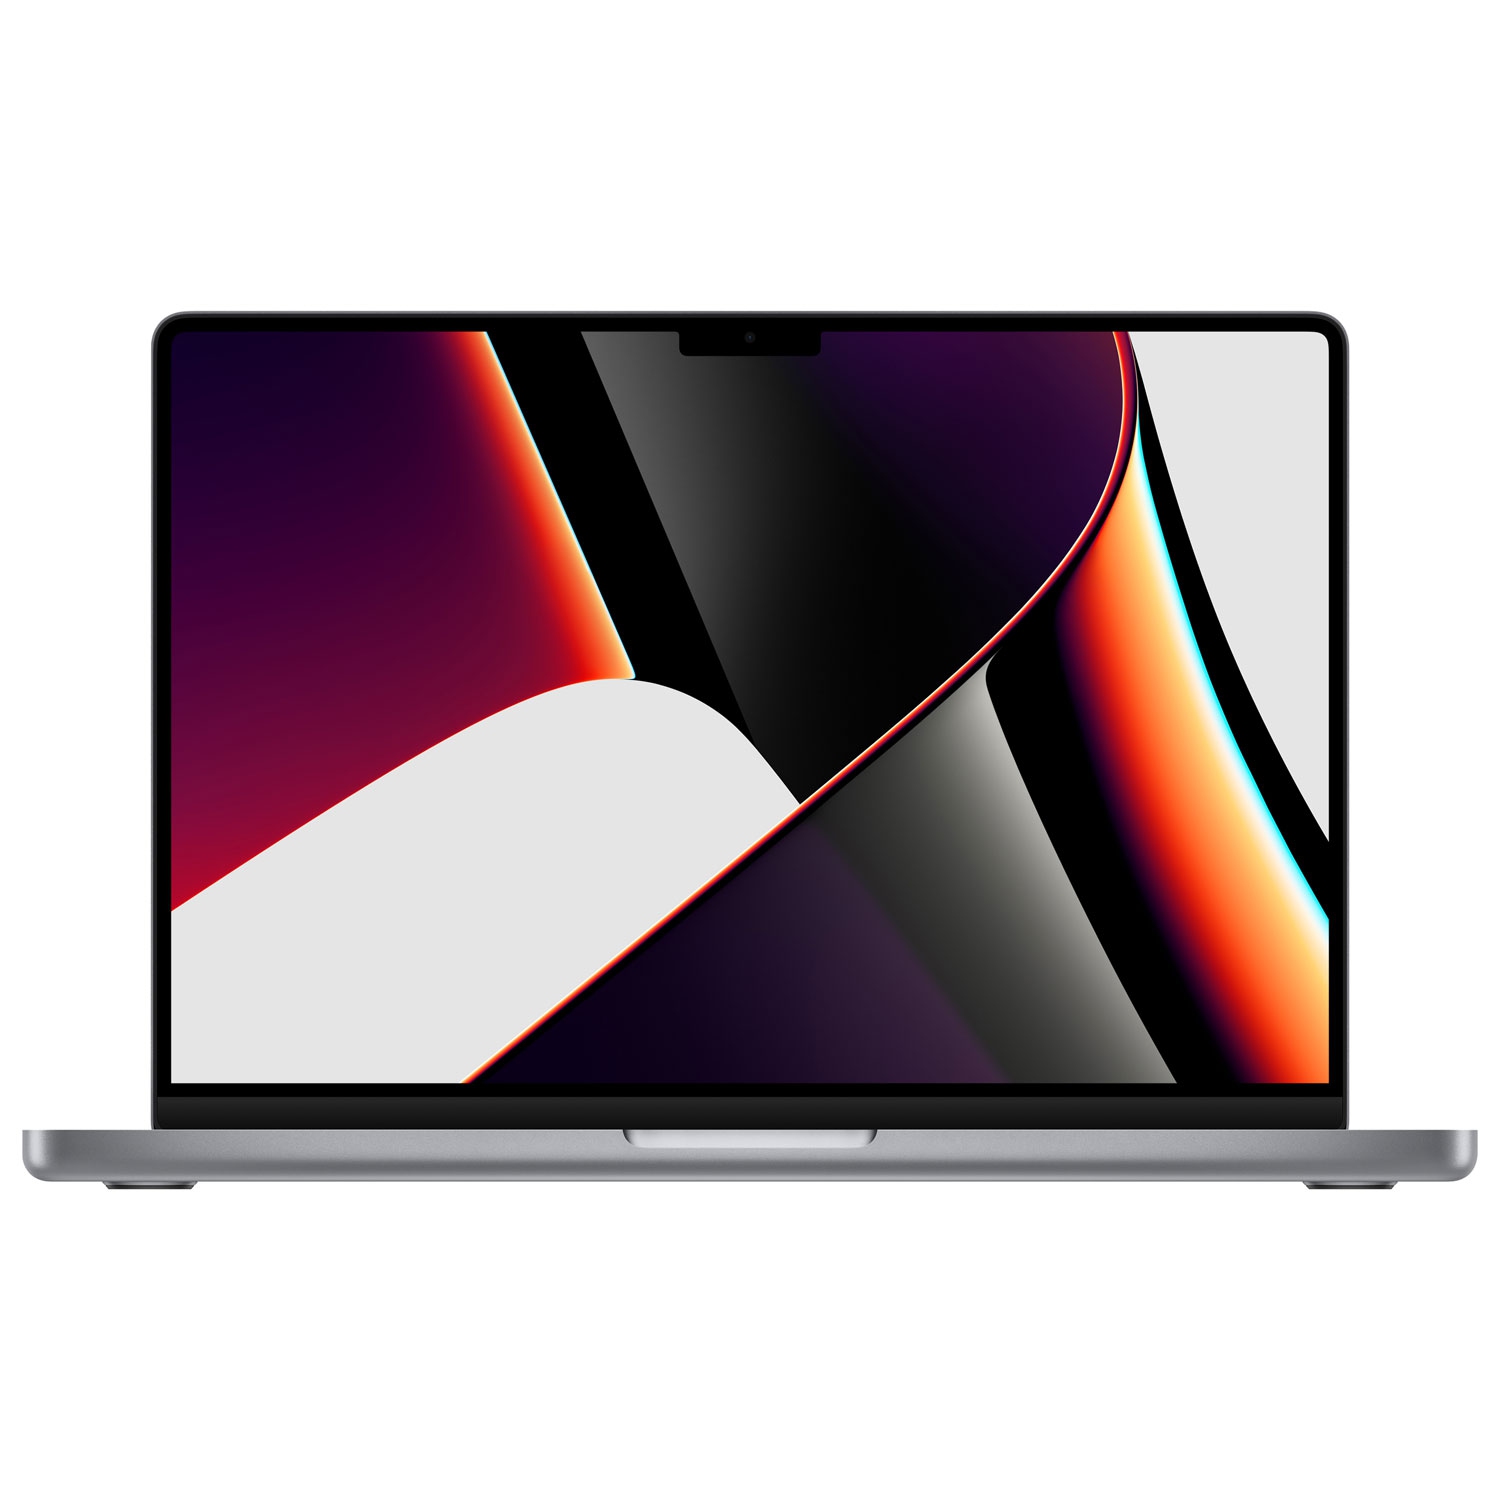 Apple MacBook Pro 14" (2021) - Space Grey (Apple M1 Pro Chip / 512GB SSD / 16GB RAM) - Apple Care+ Expires FEBRUARY 2025 - English - Open Box